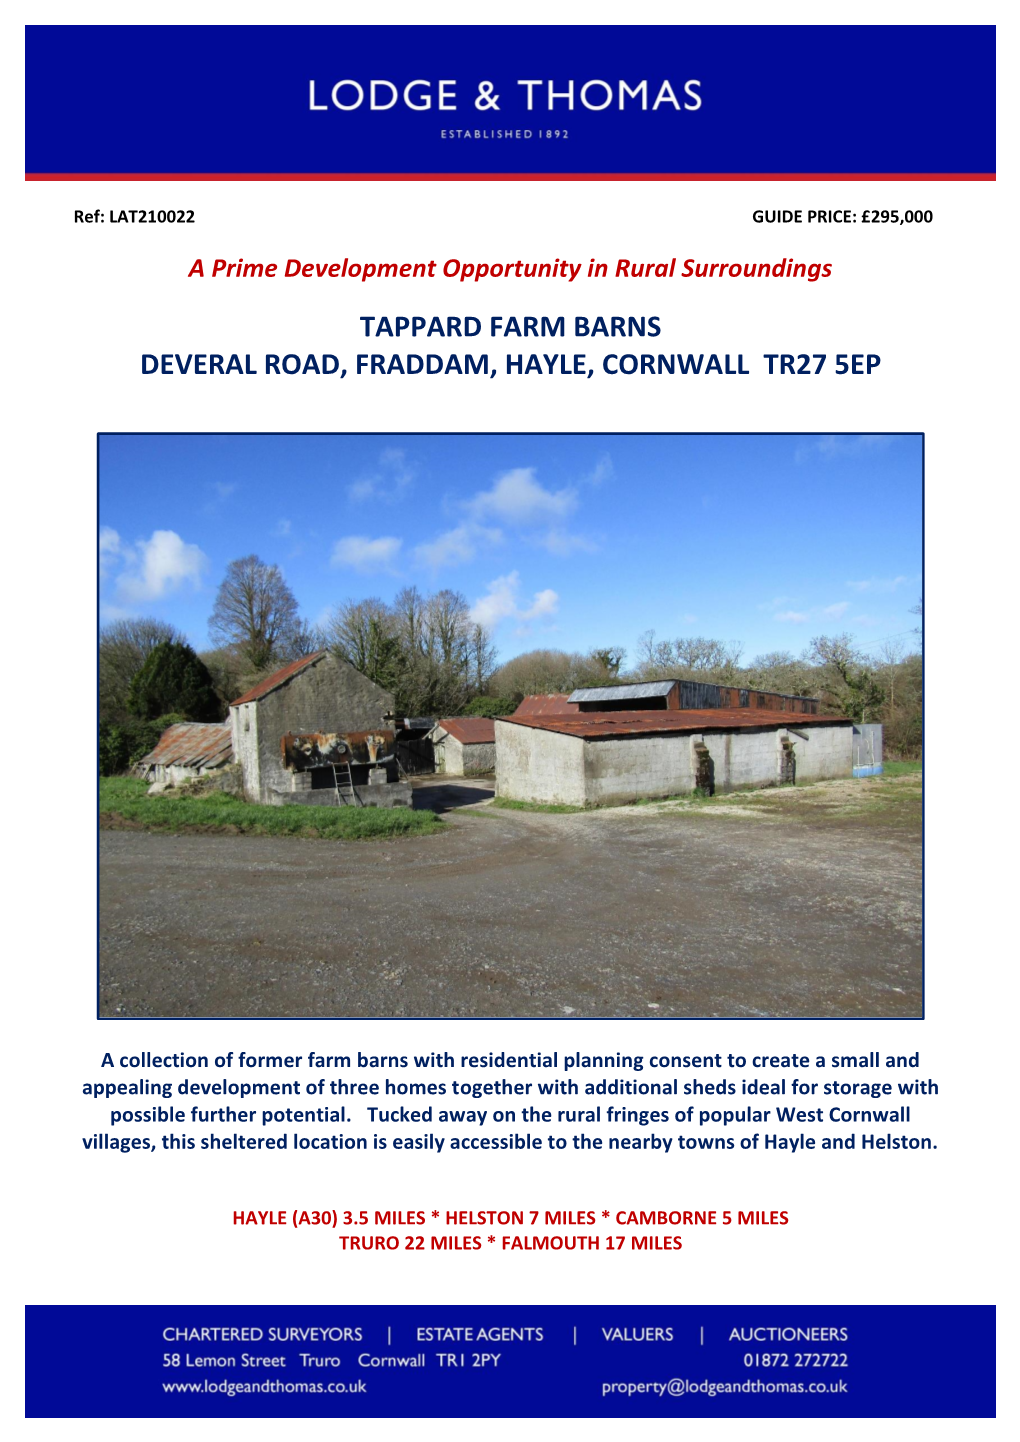 Tappard Farm Barns Deveral Road, Fraddam, Hayle, Cornwall Tr27 5Ep